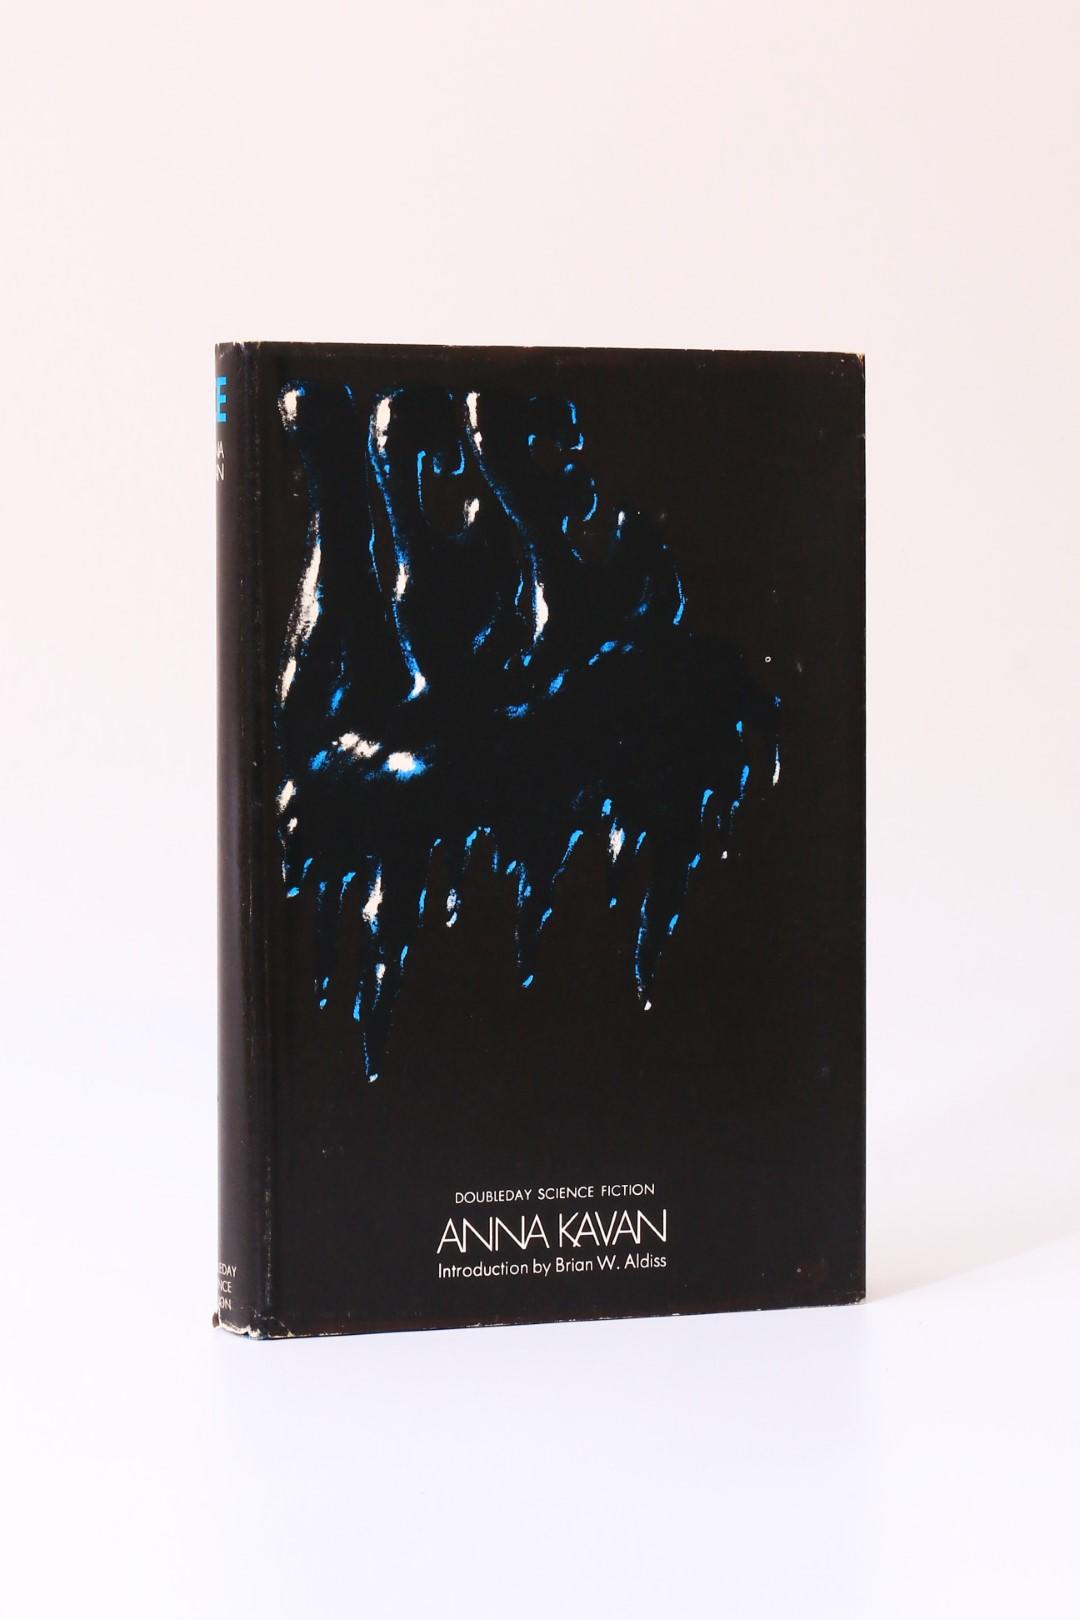 Anna Kavan - Ice - Doubleday, 1970, First Edition.